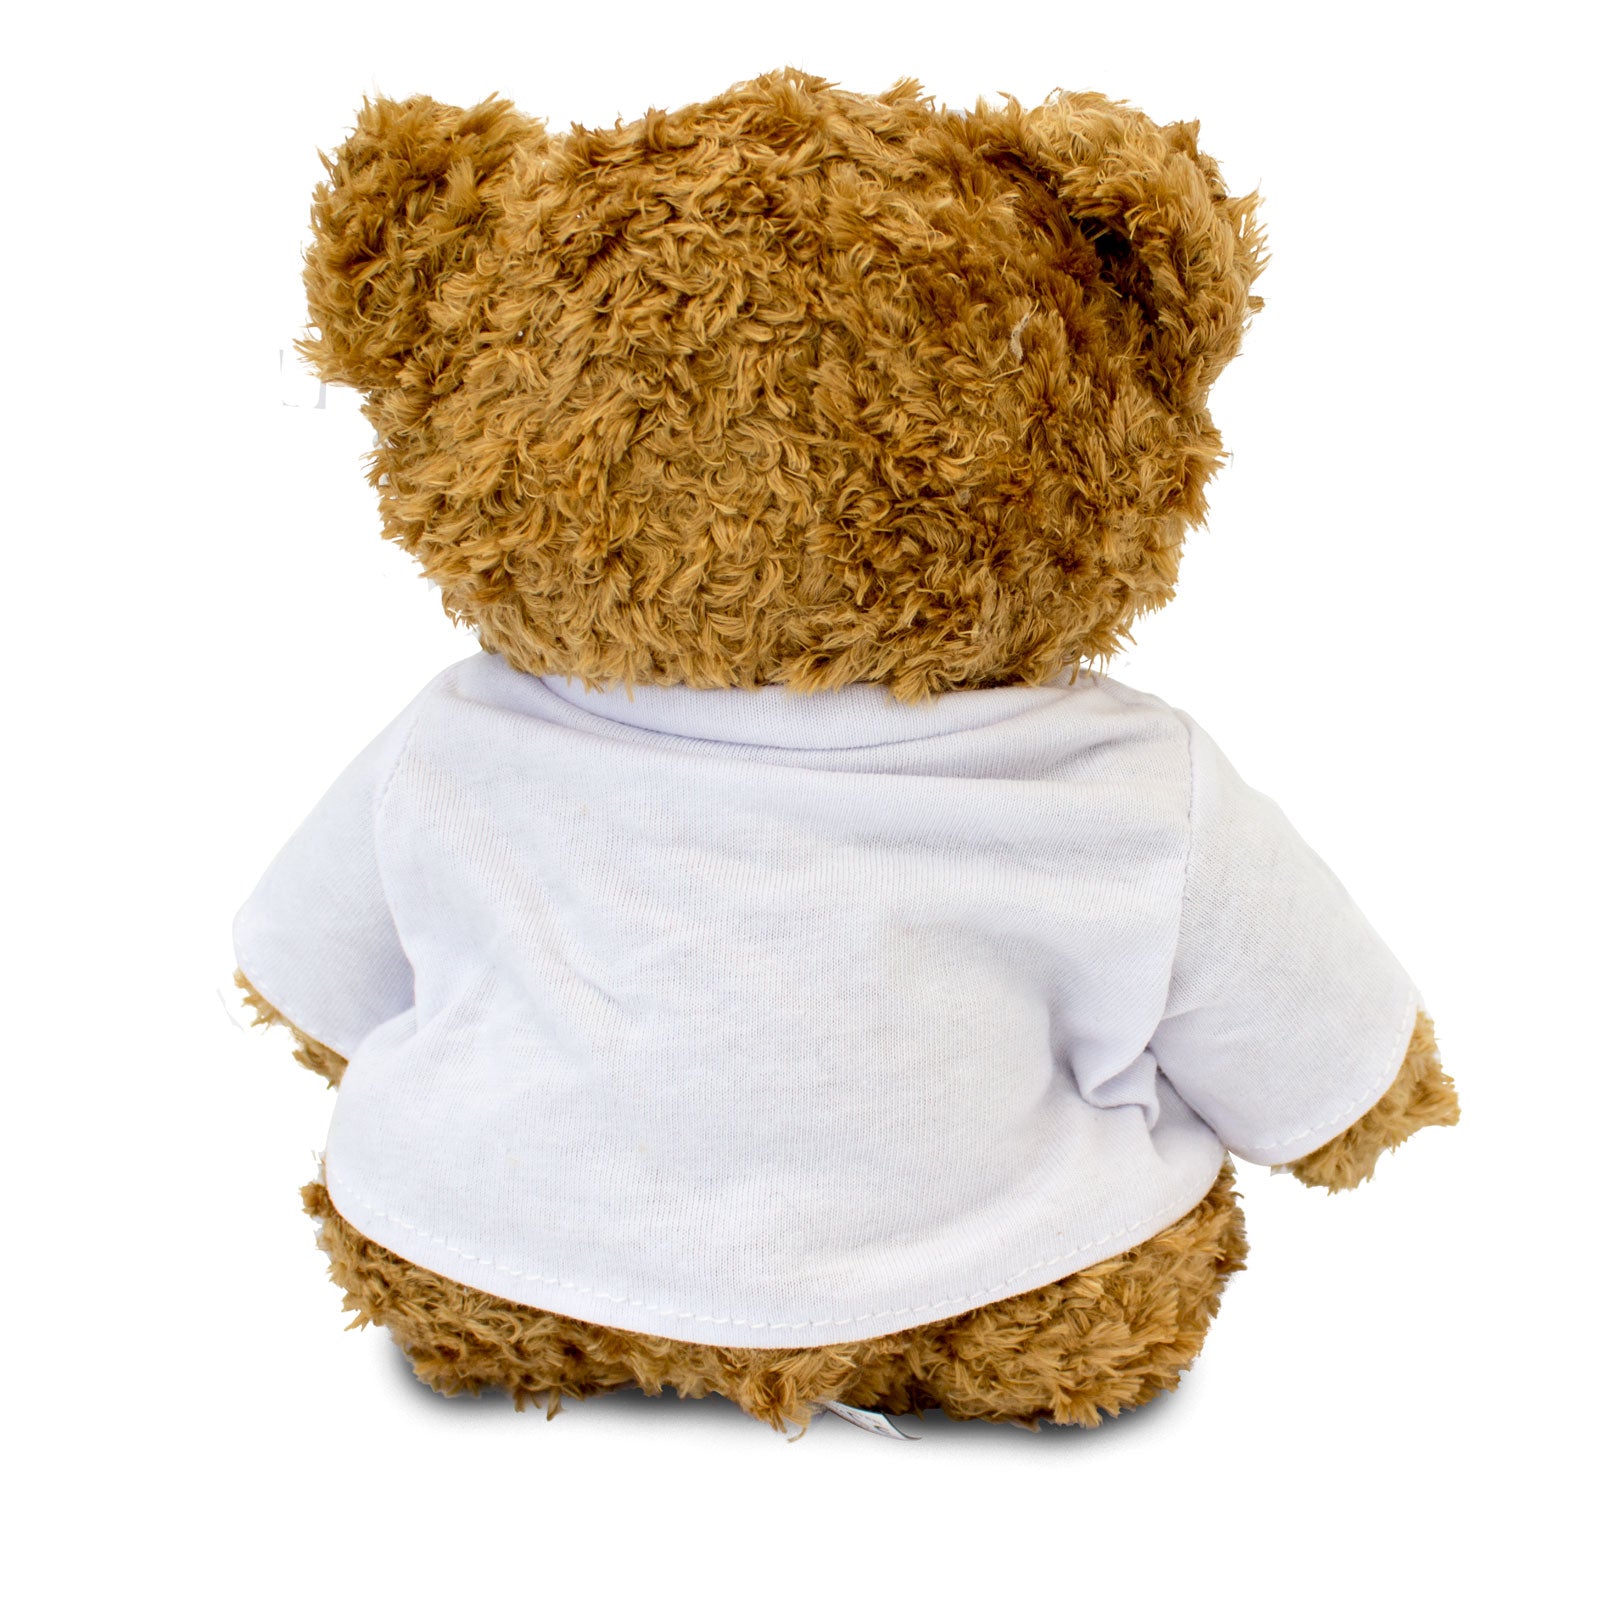 I Love Max - Teddy Bear